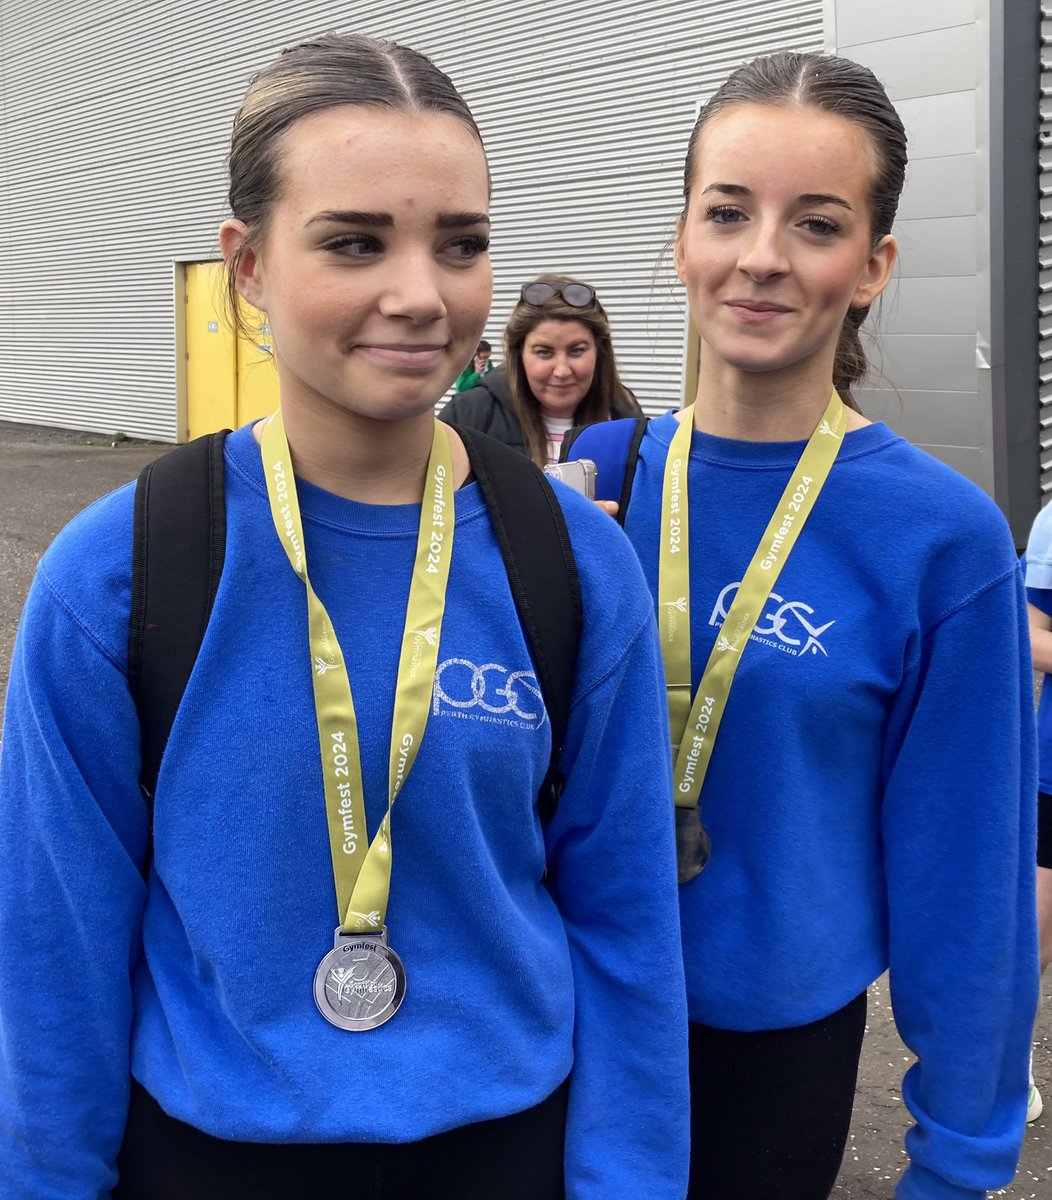 Fabulous performances from Jenna & Ellie in Motherwell on Sunday with @PerthGymnastics @ASHighlandPerth @PitlochrySchool